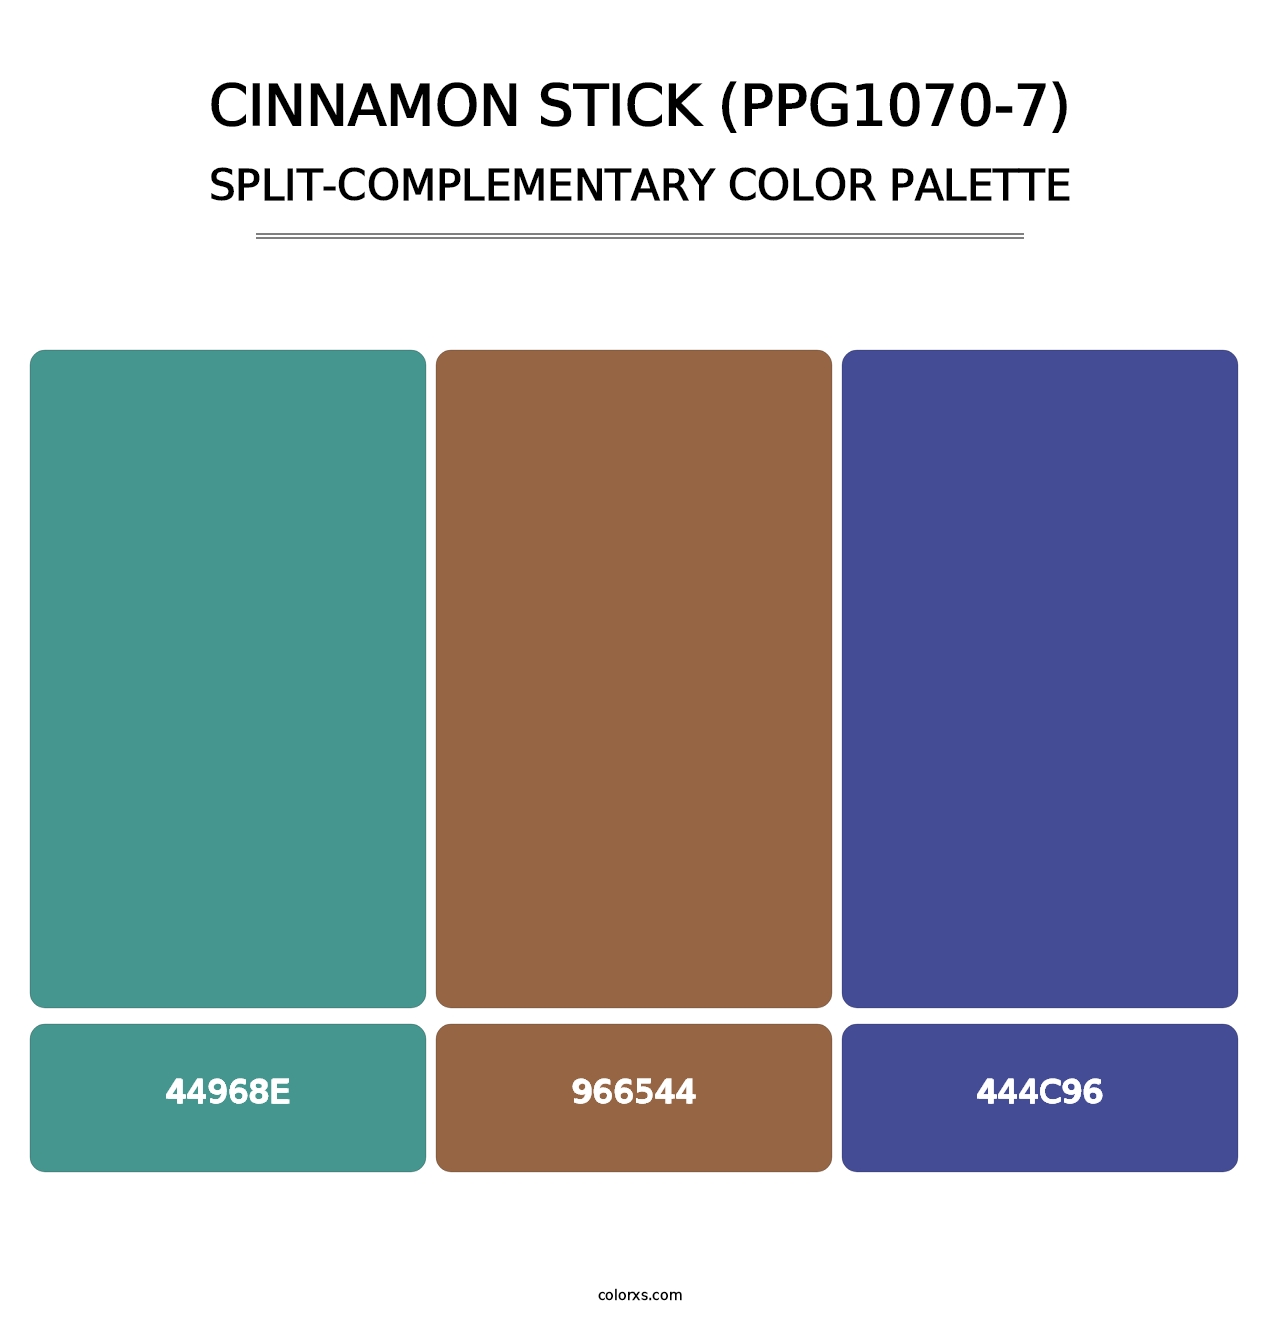 Cinnamon Stick (PPG1070-7) - Split-Complementary Color Palette